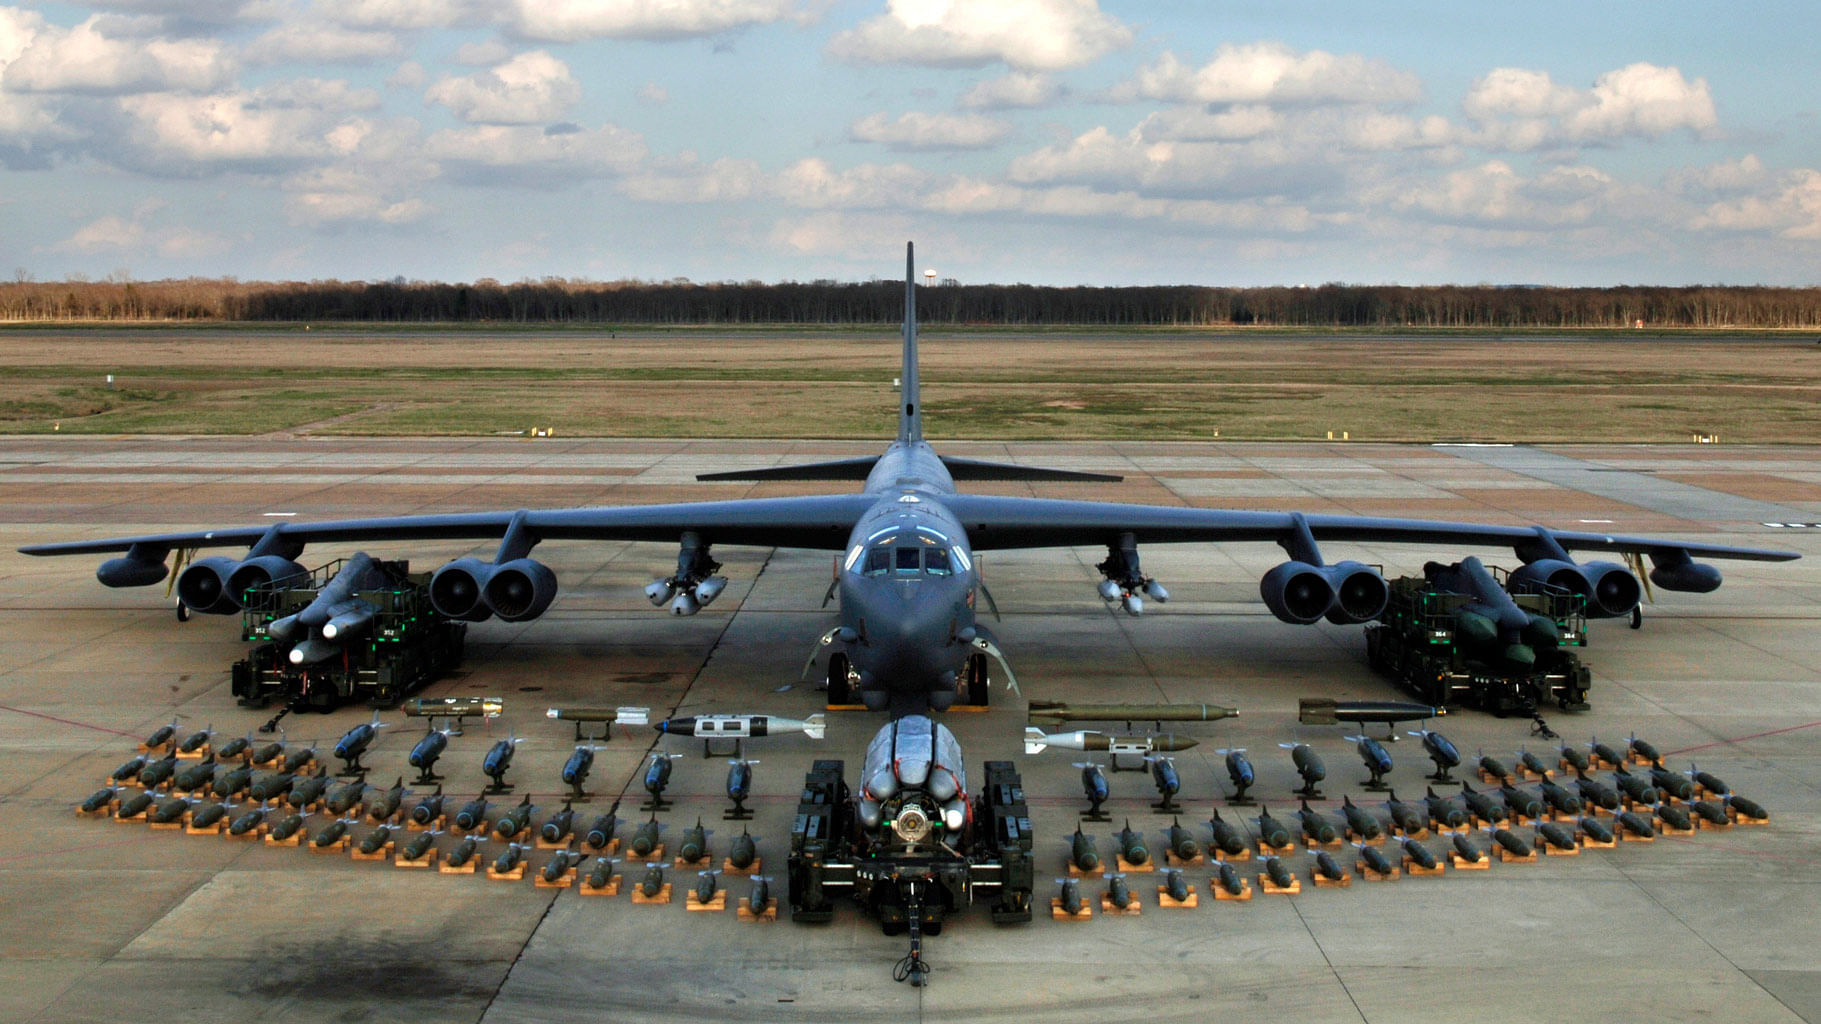 Boeing B-52 Stratofortress, Bomber Aircraft. (Photo: <a href="https://en.wikipedia.org/wiki/Boeing_B-52_Stratofortress">Wikipiedia</a>)